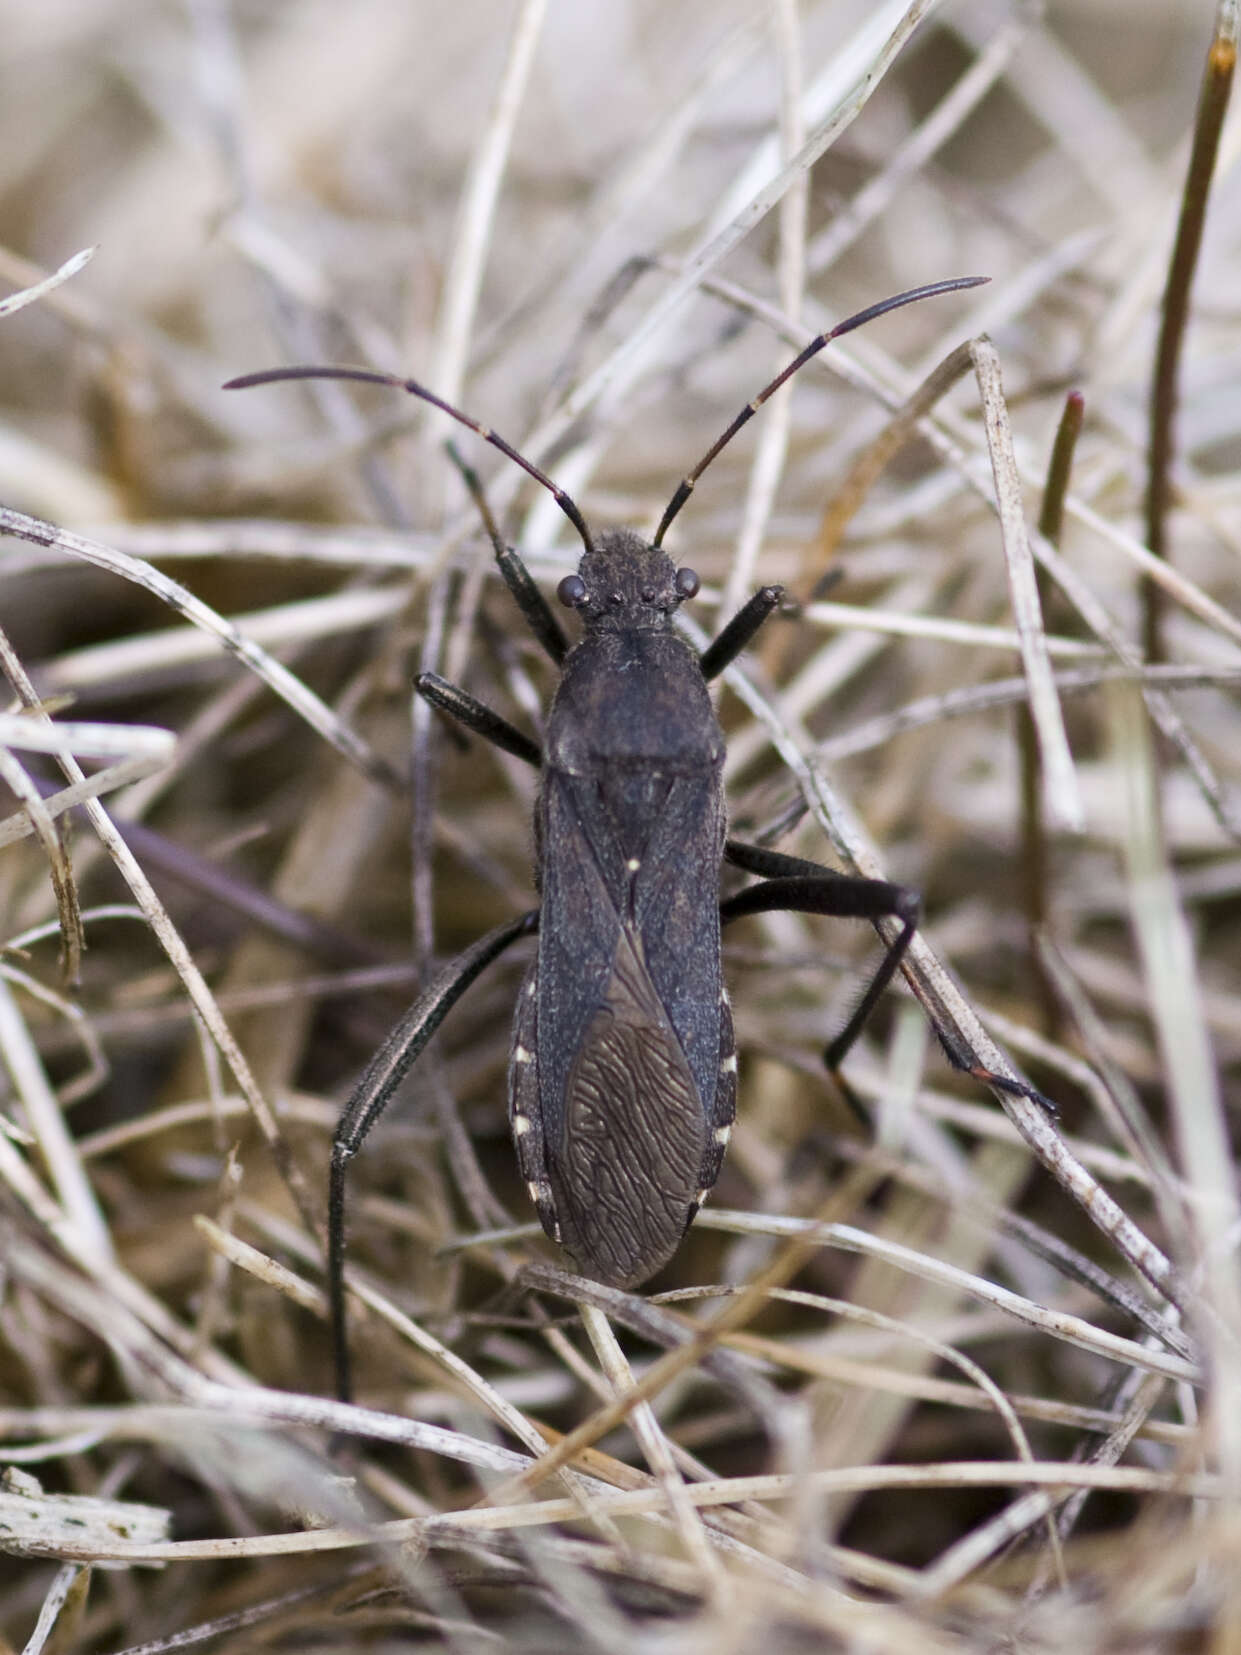 Image of broad-headed bugs